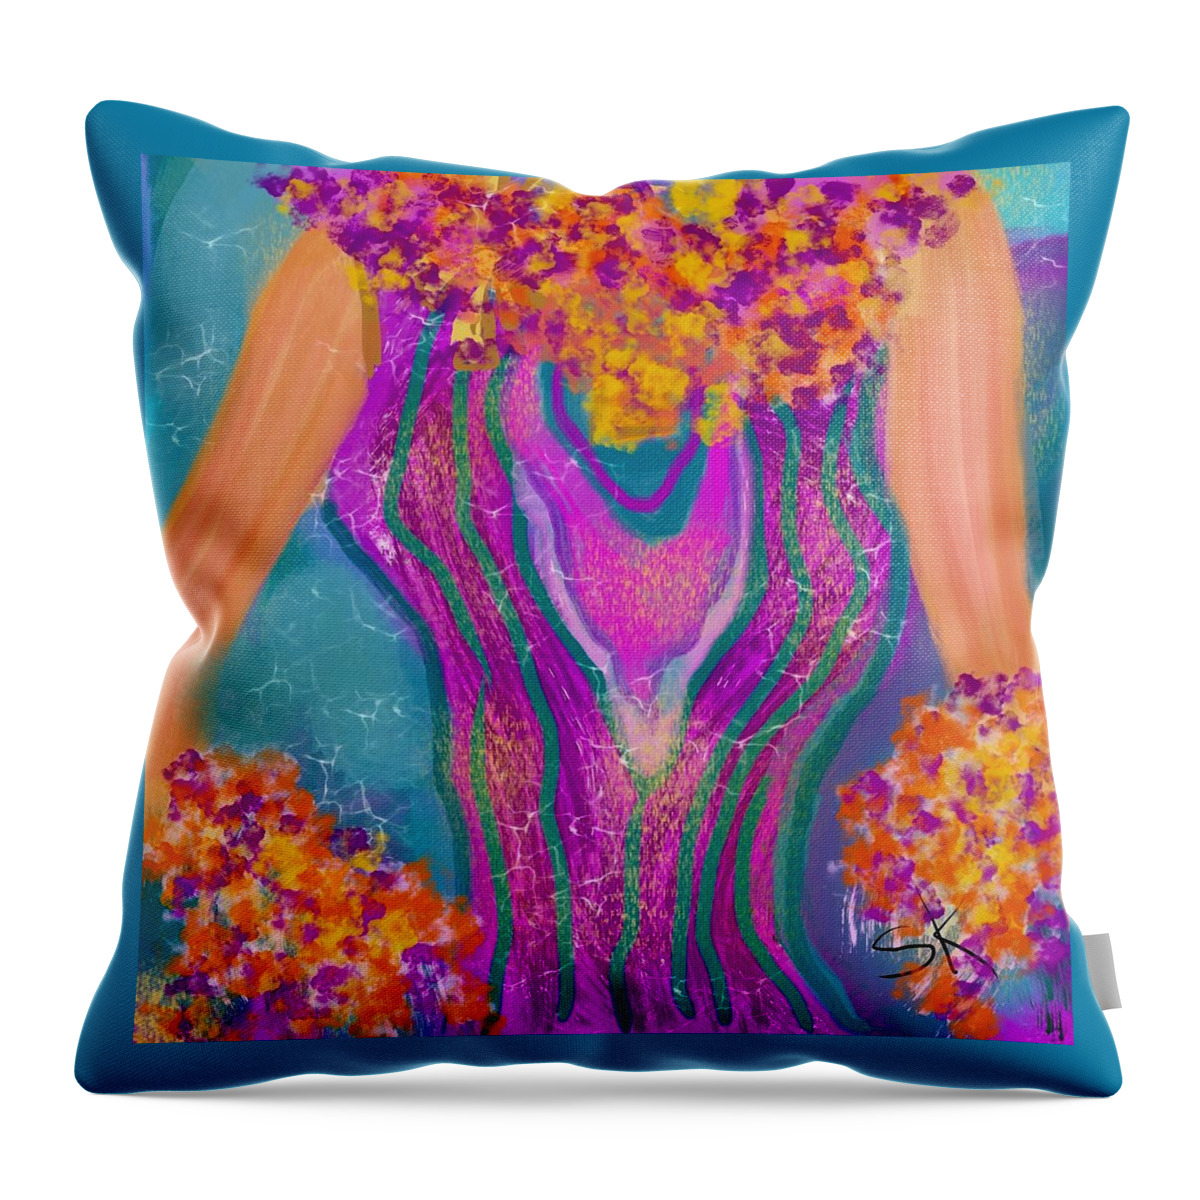 Abstract Throw Pillow featuring the digital art Aloha by Sherry Killam